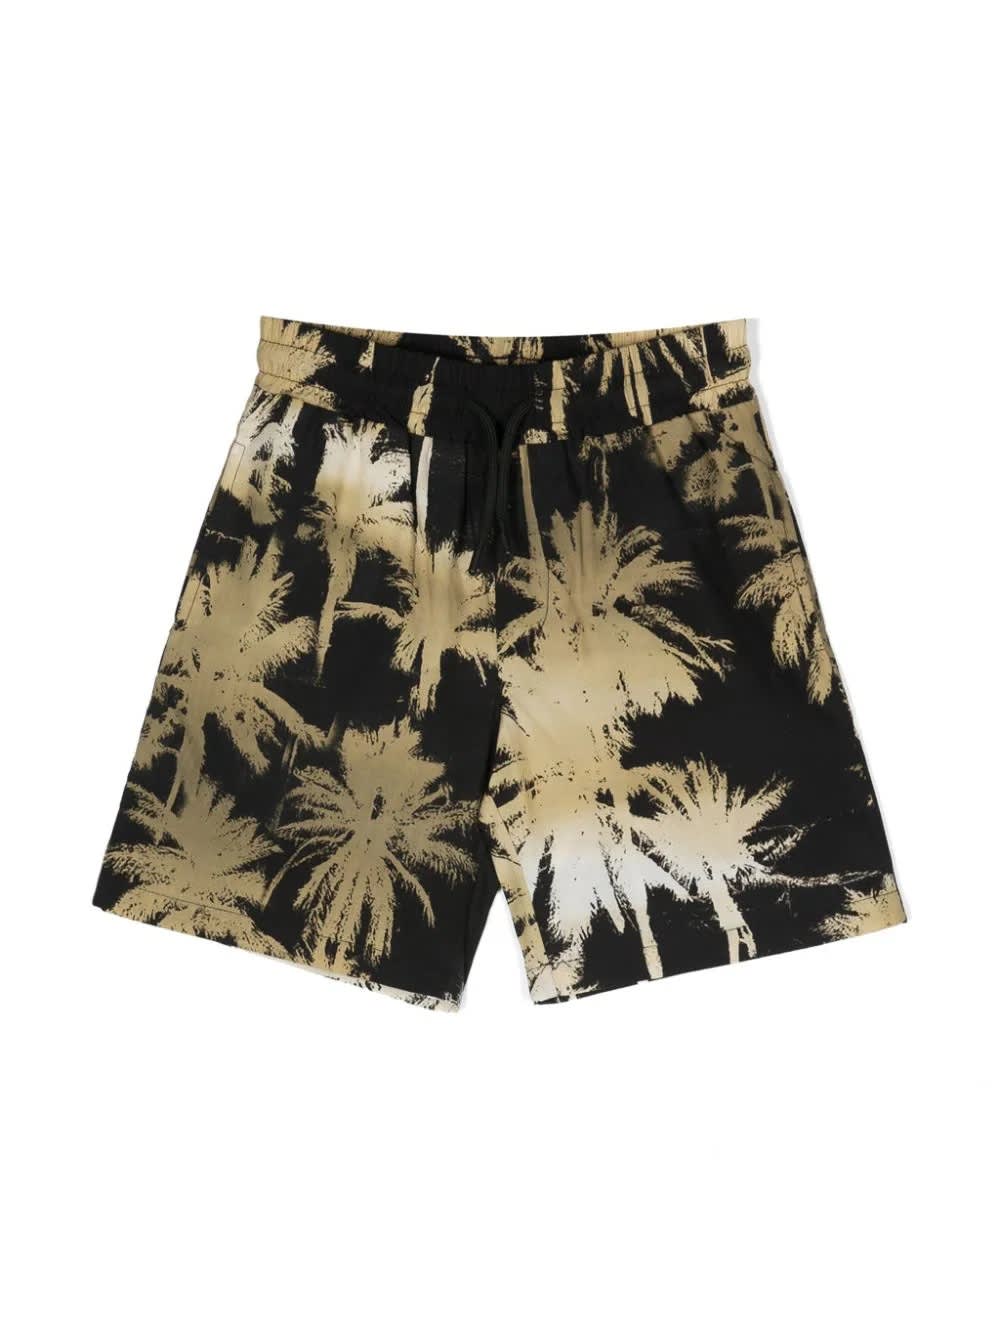 Shop Msgm Black Shorts With Palm Tree Print